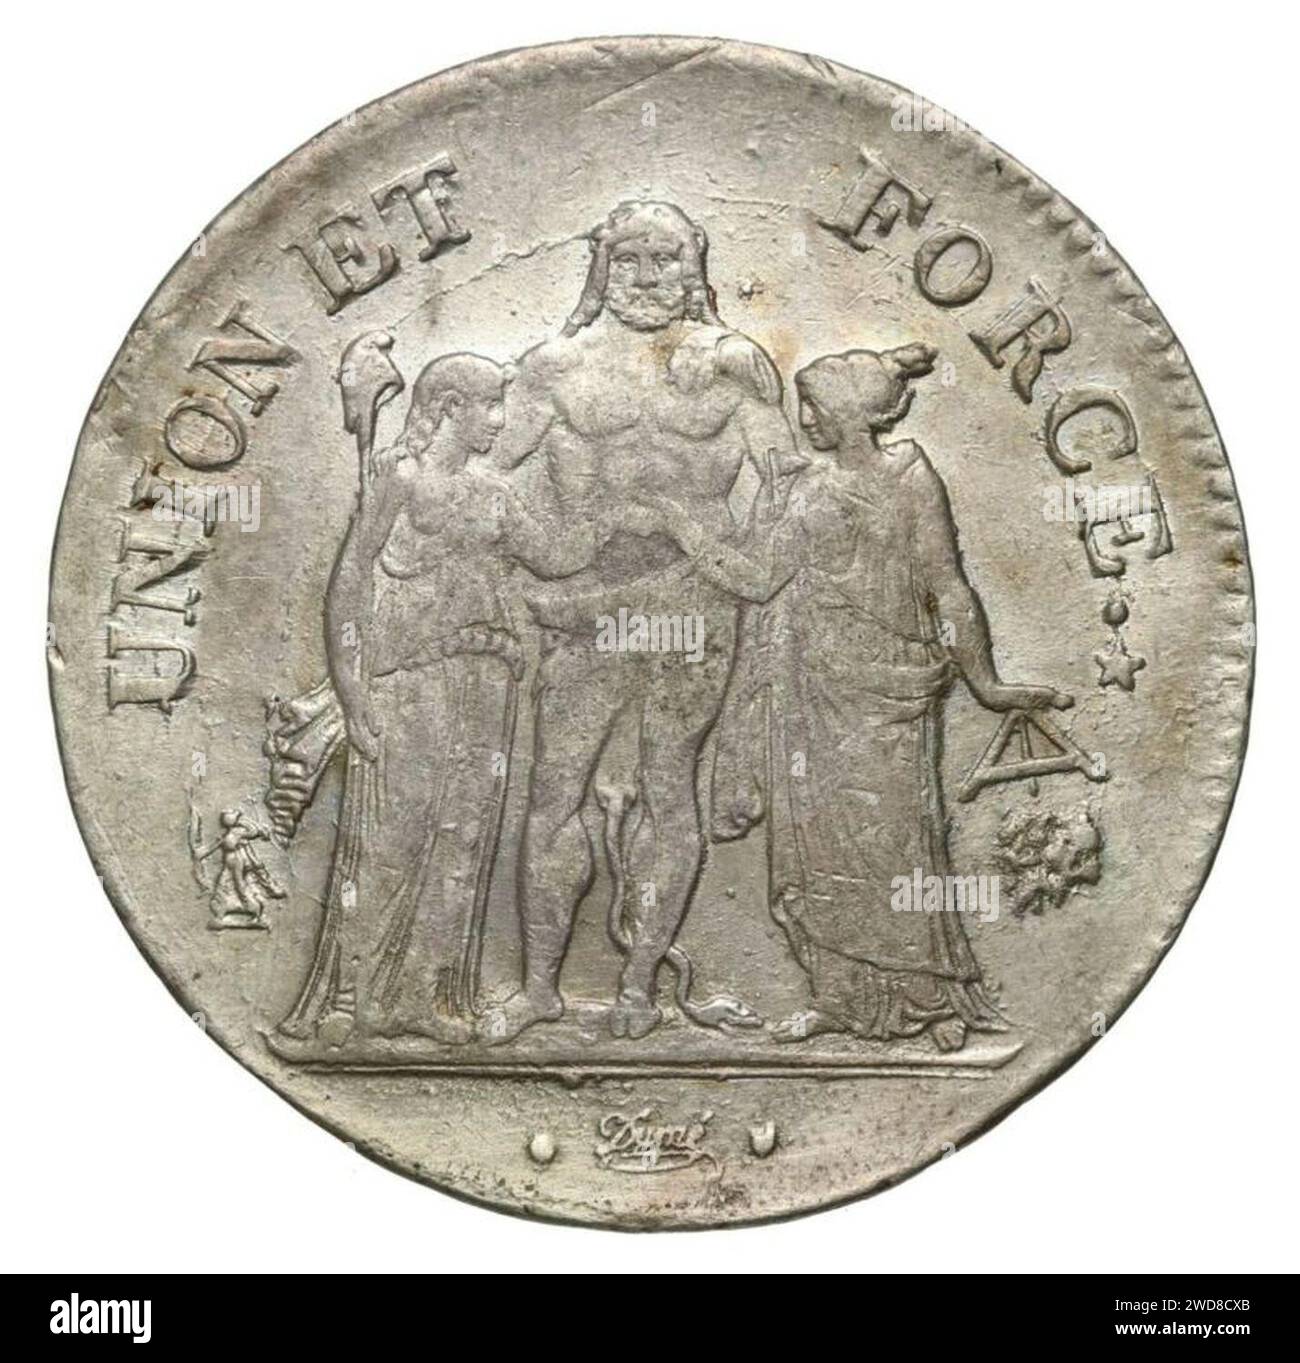 5 Francs 9 L'an - Französische Republik (1800) Bielik-Münzen 02. Stockfoto